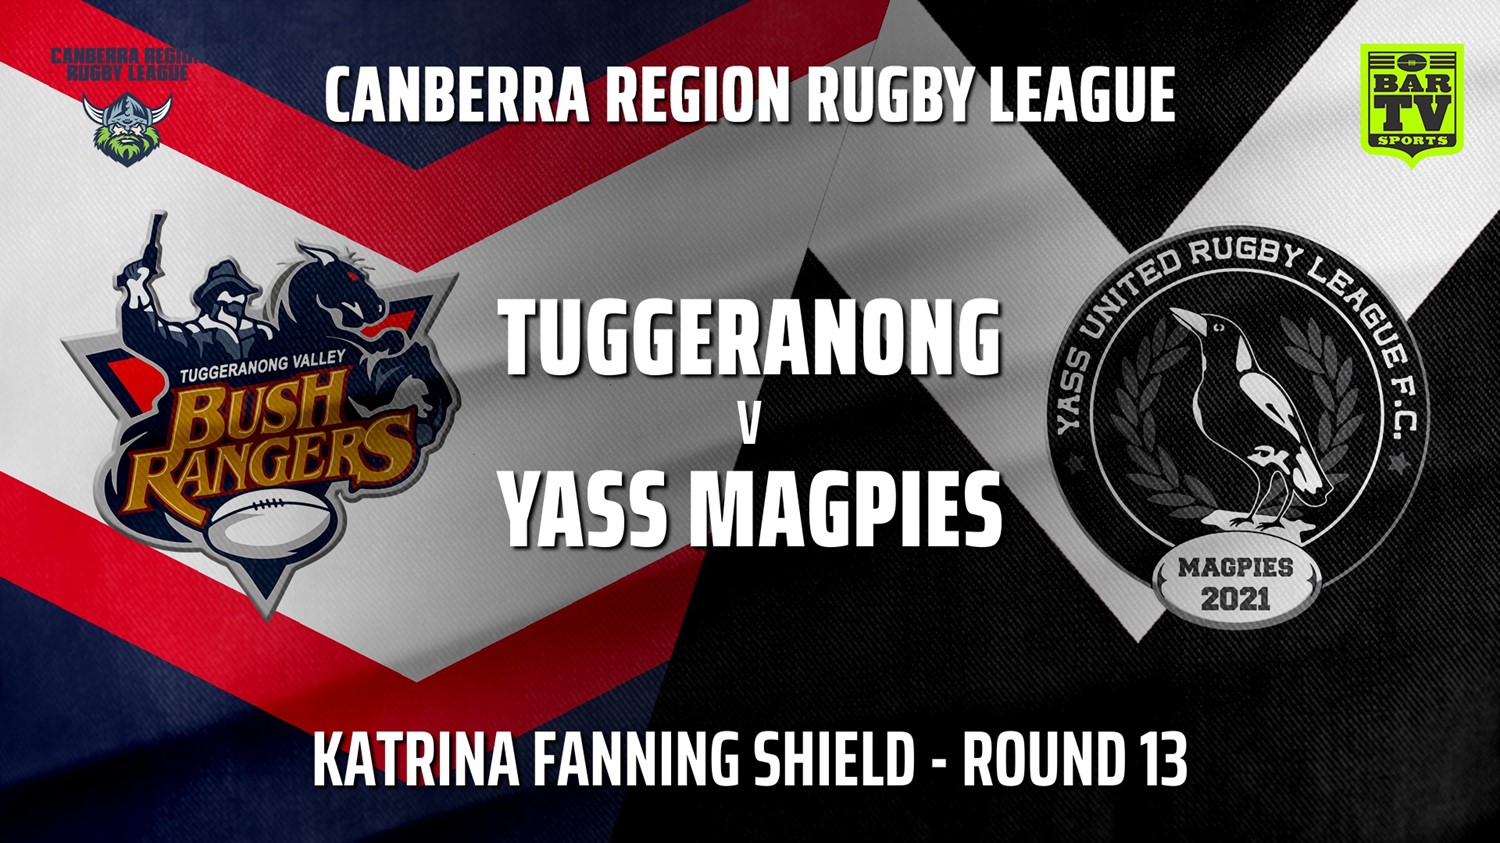 210731-Canberra Round 13 - Katrina Fanning Shield - Tuggeranong Bushrangers v Yass Magpies Slate Image